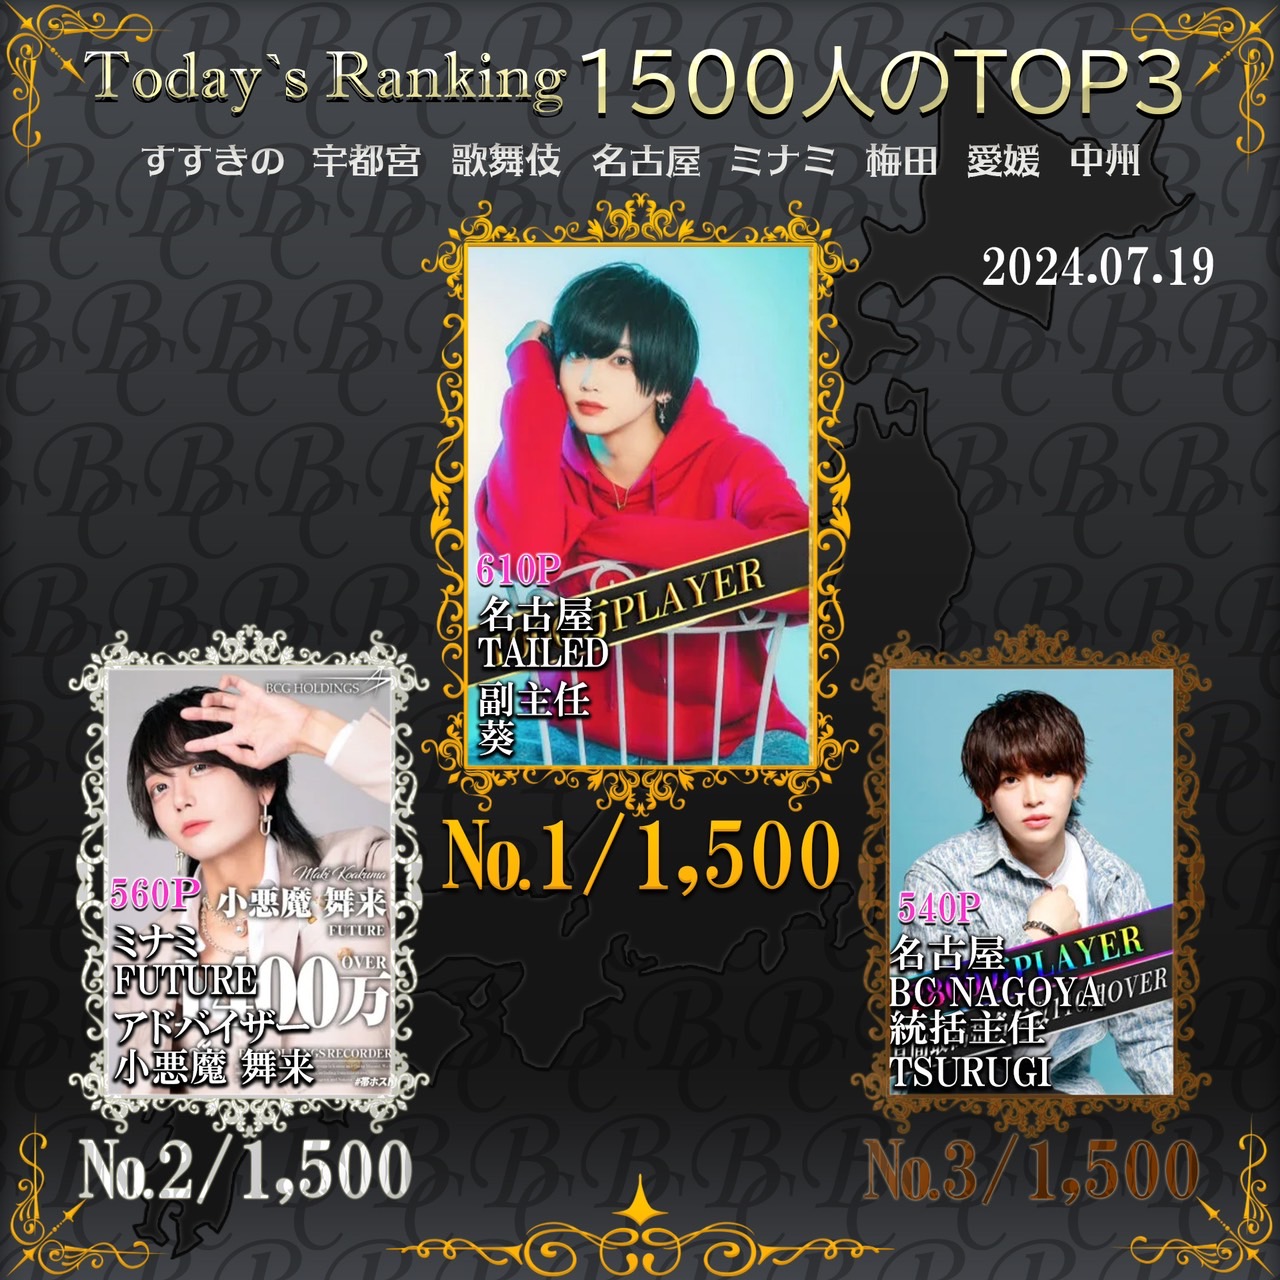 7/19 Today’s Ranking